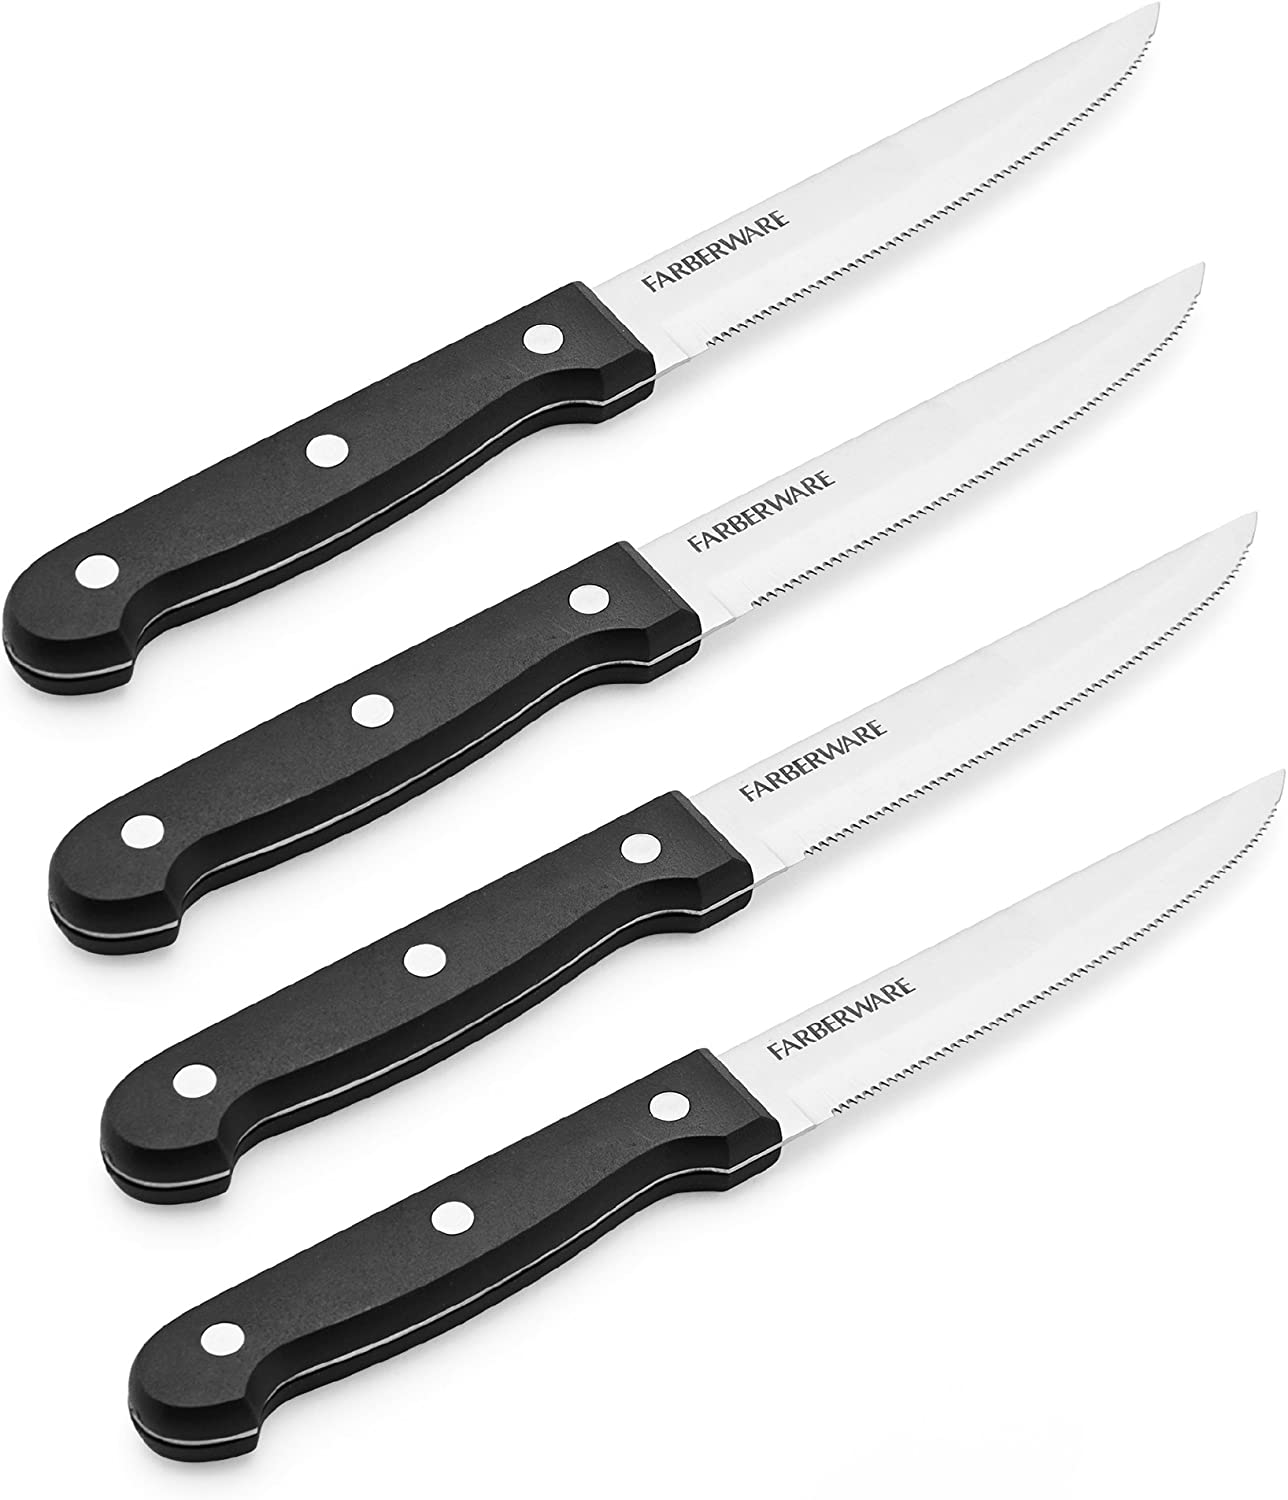 Farberware Steak Knife Set